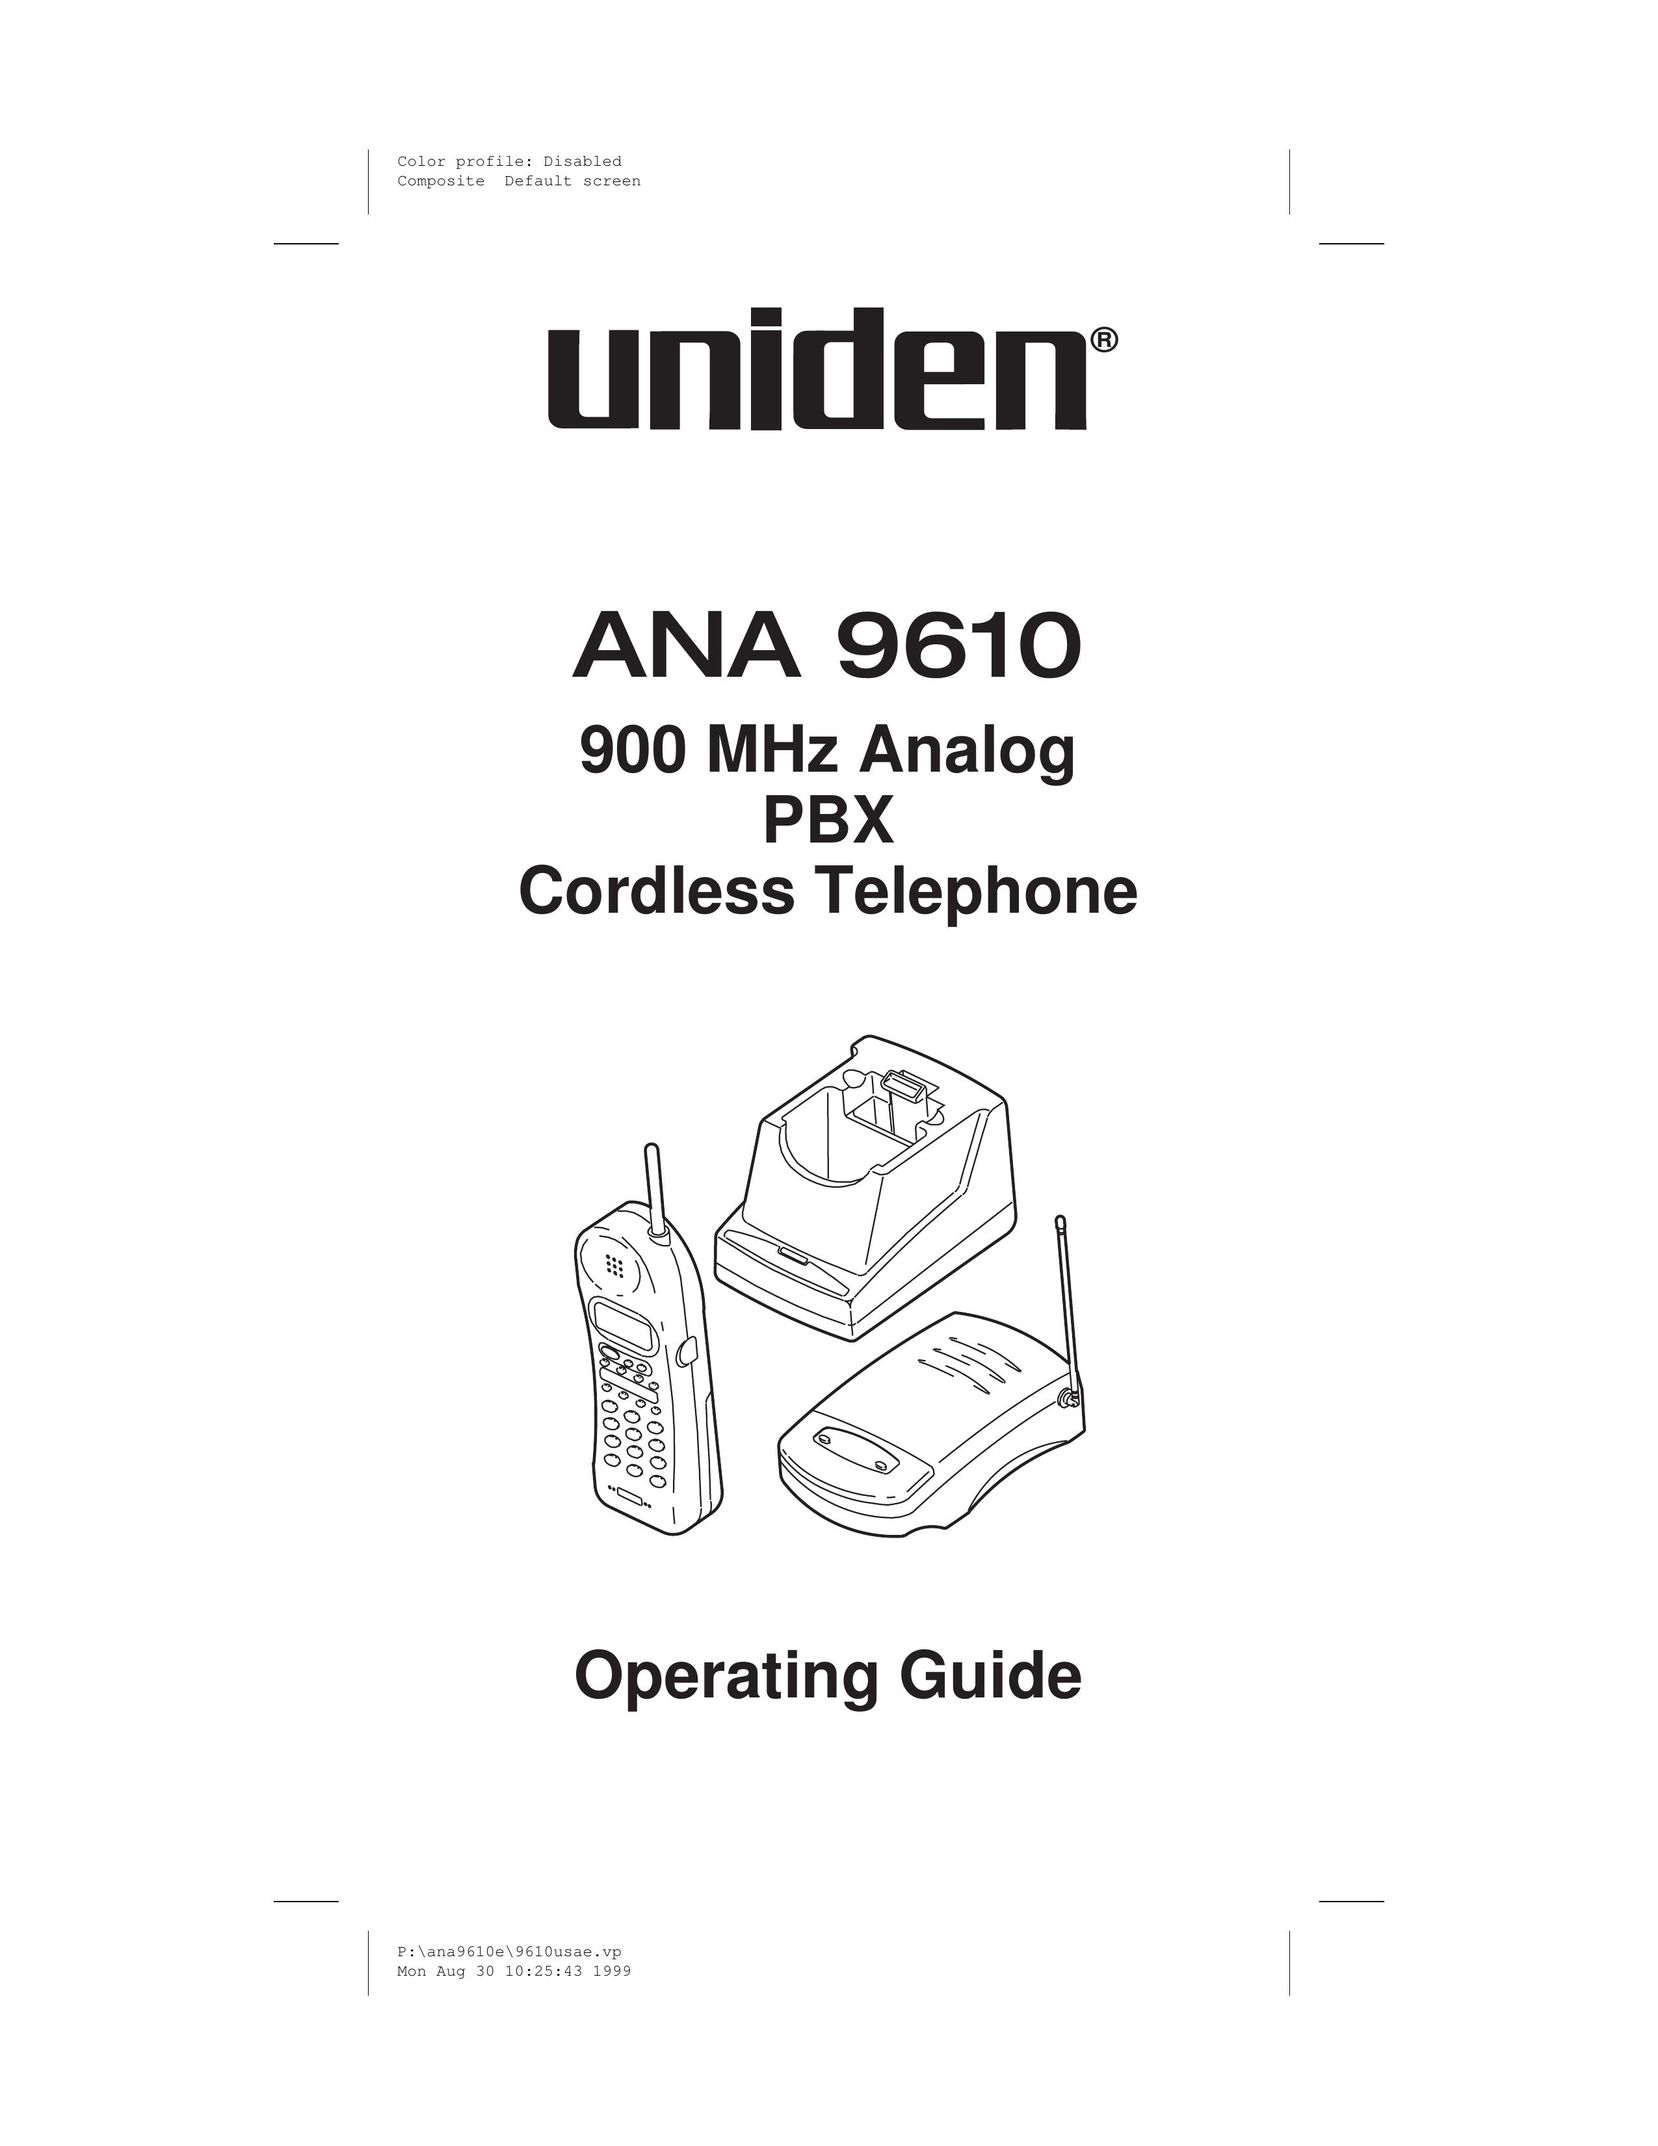 Uniden 9610 Cordless Telephone User Manual